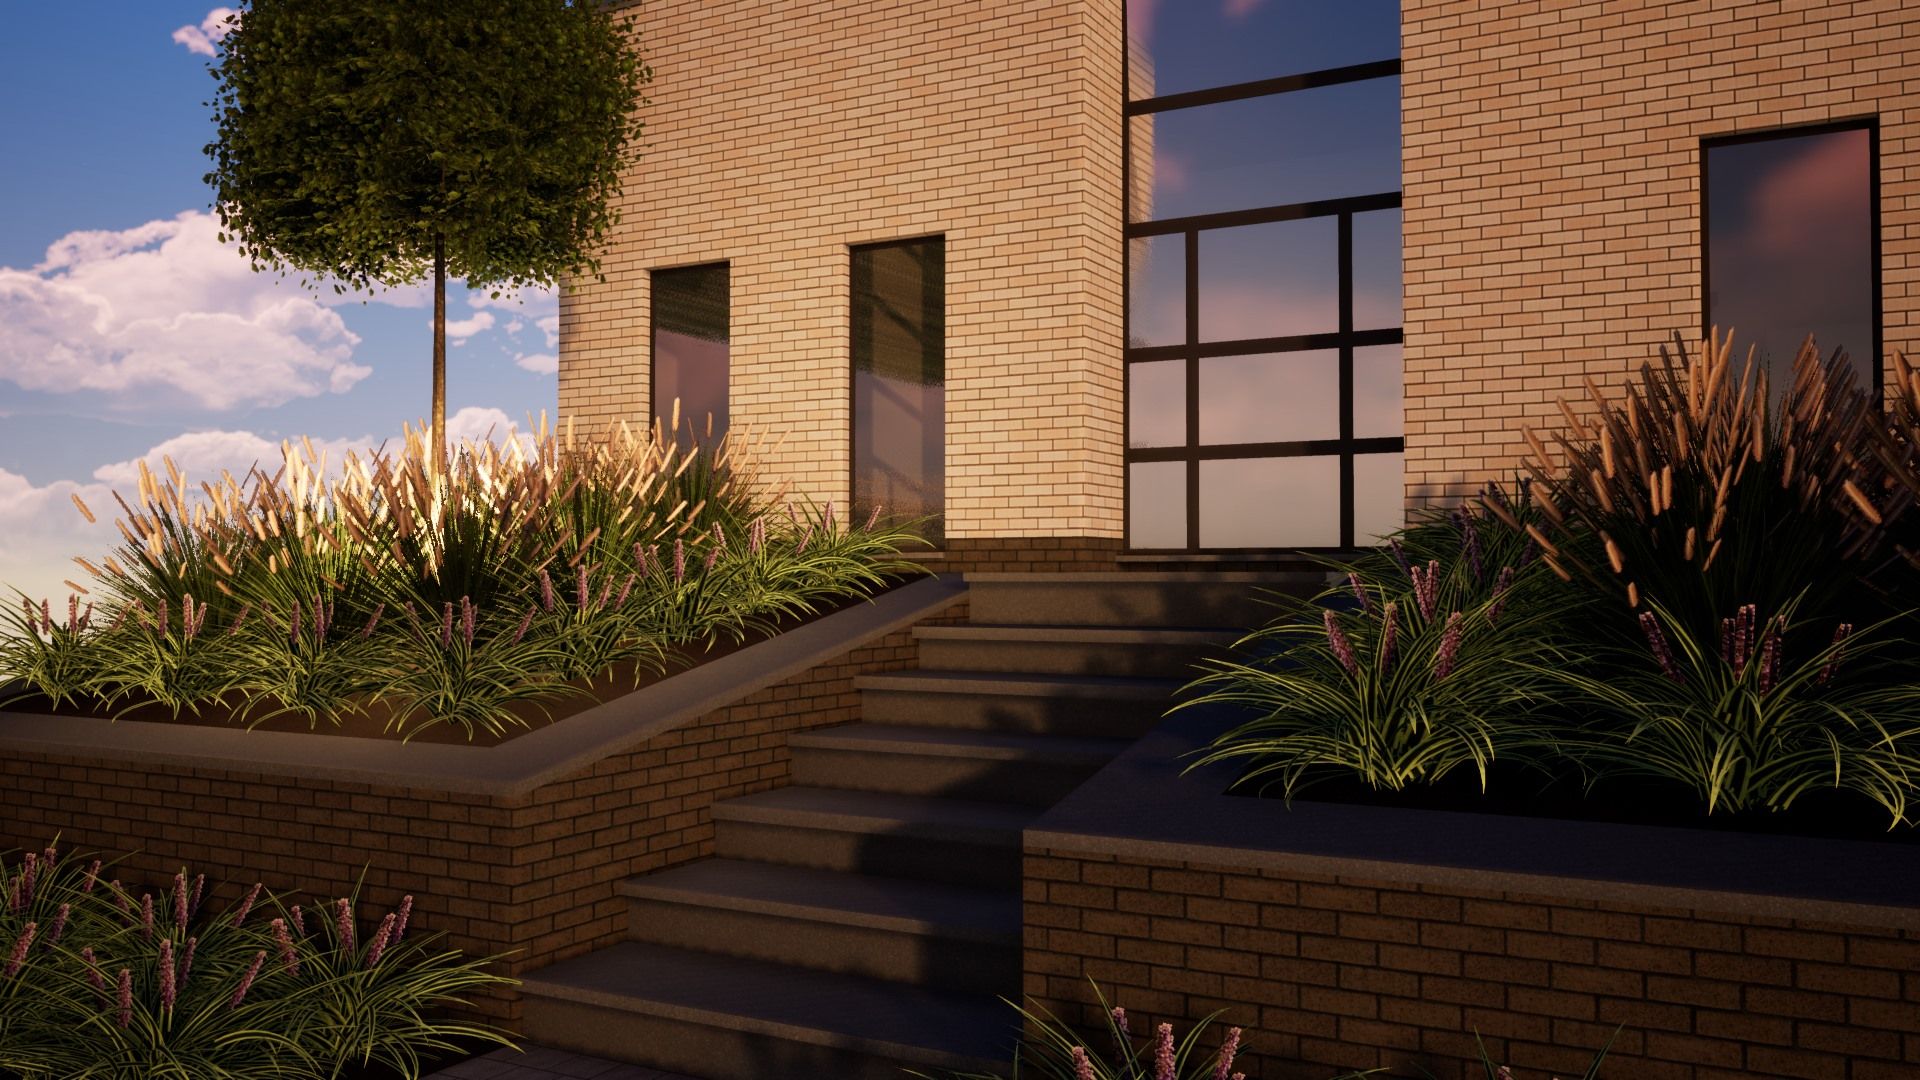 Tuinontwerp 3D Modern - Green Art tuinarchitectuur